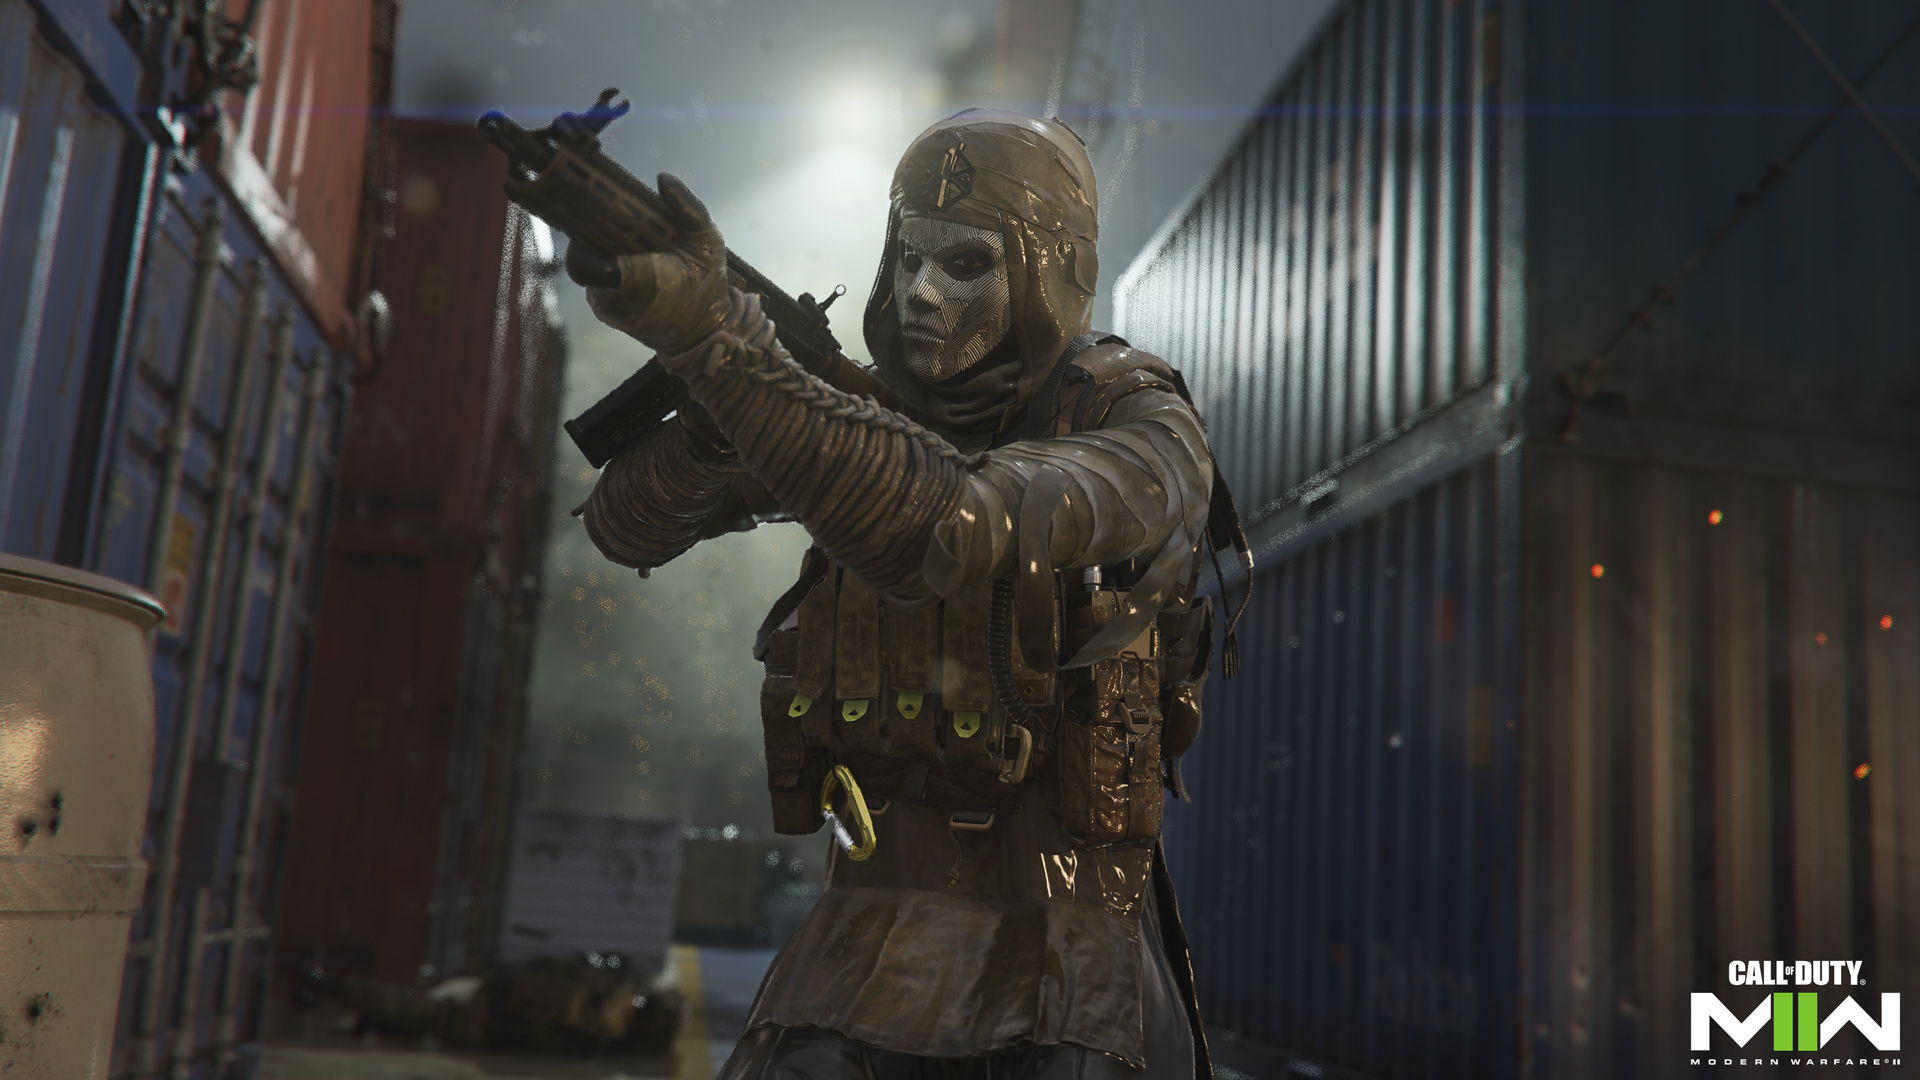 Modern Warfare 2 confirms Gun Game mode will return in Season 2